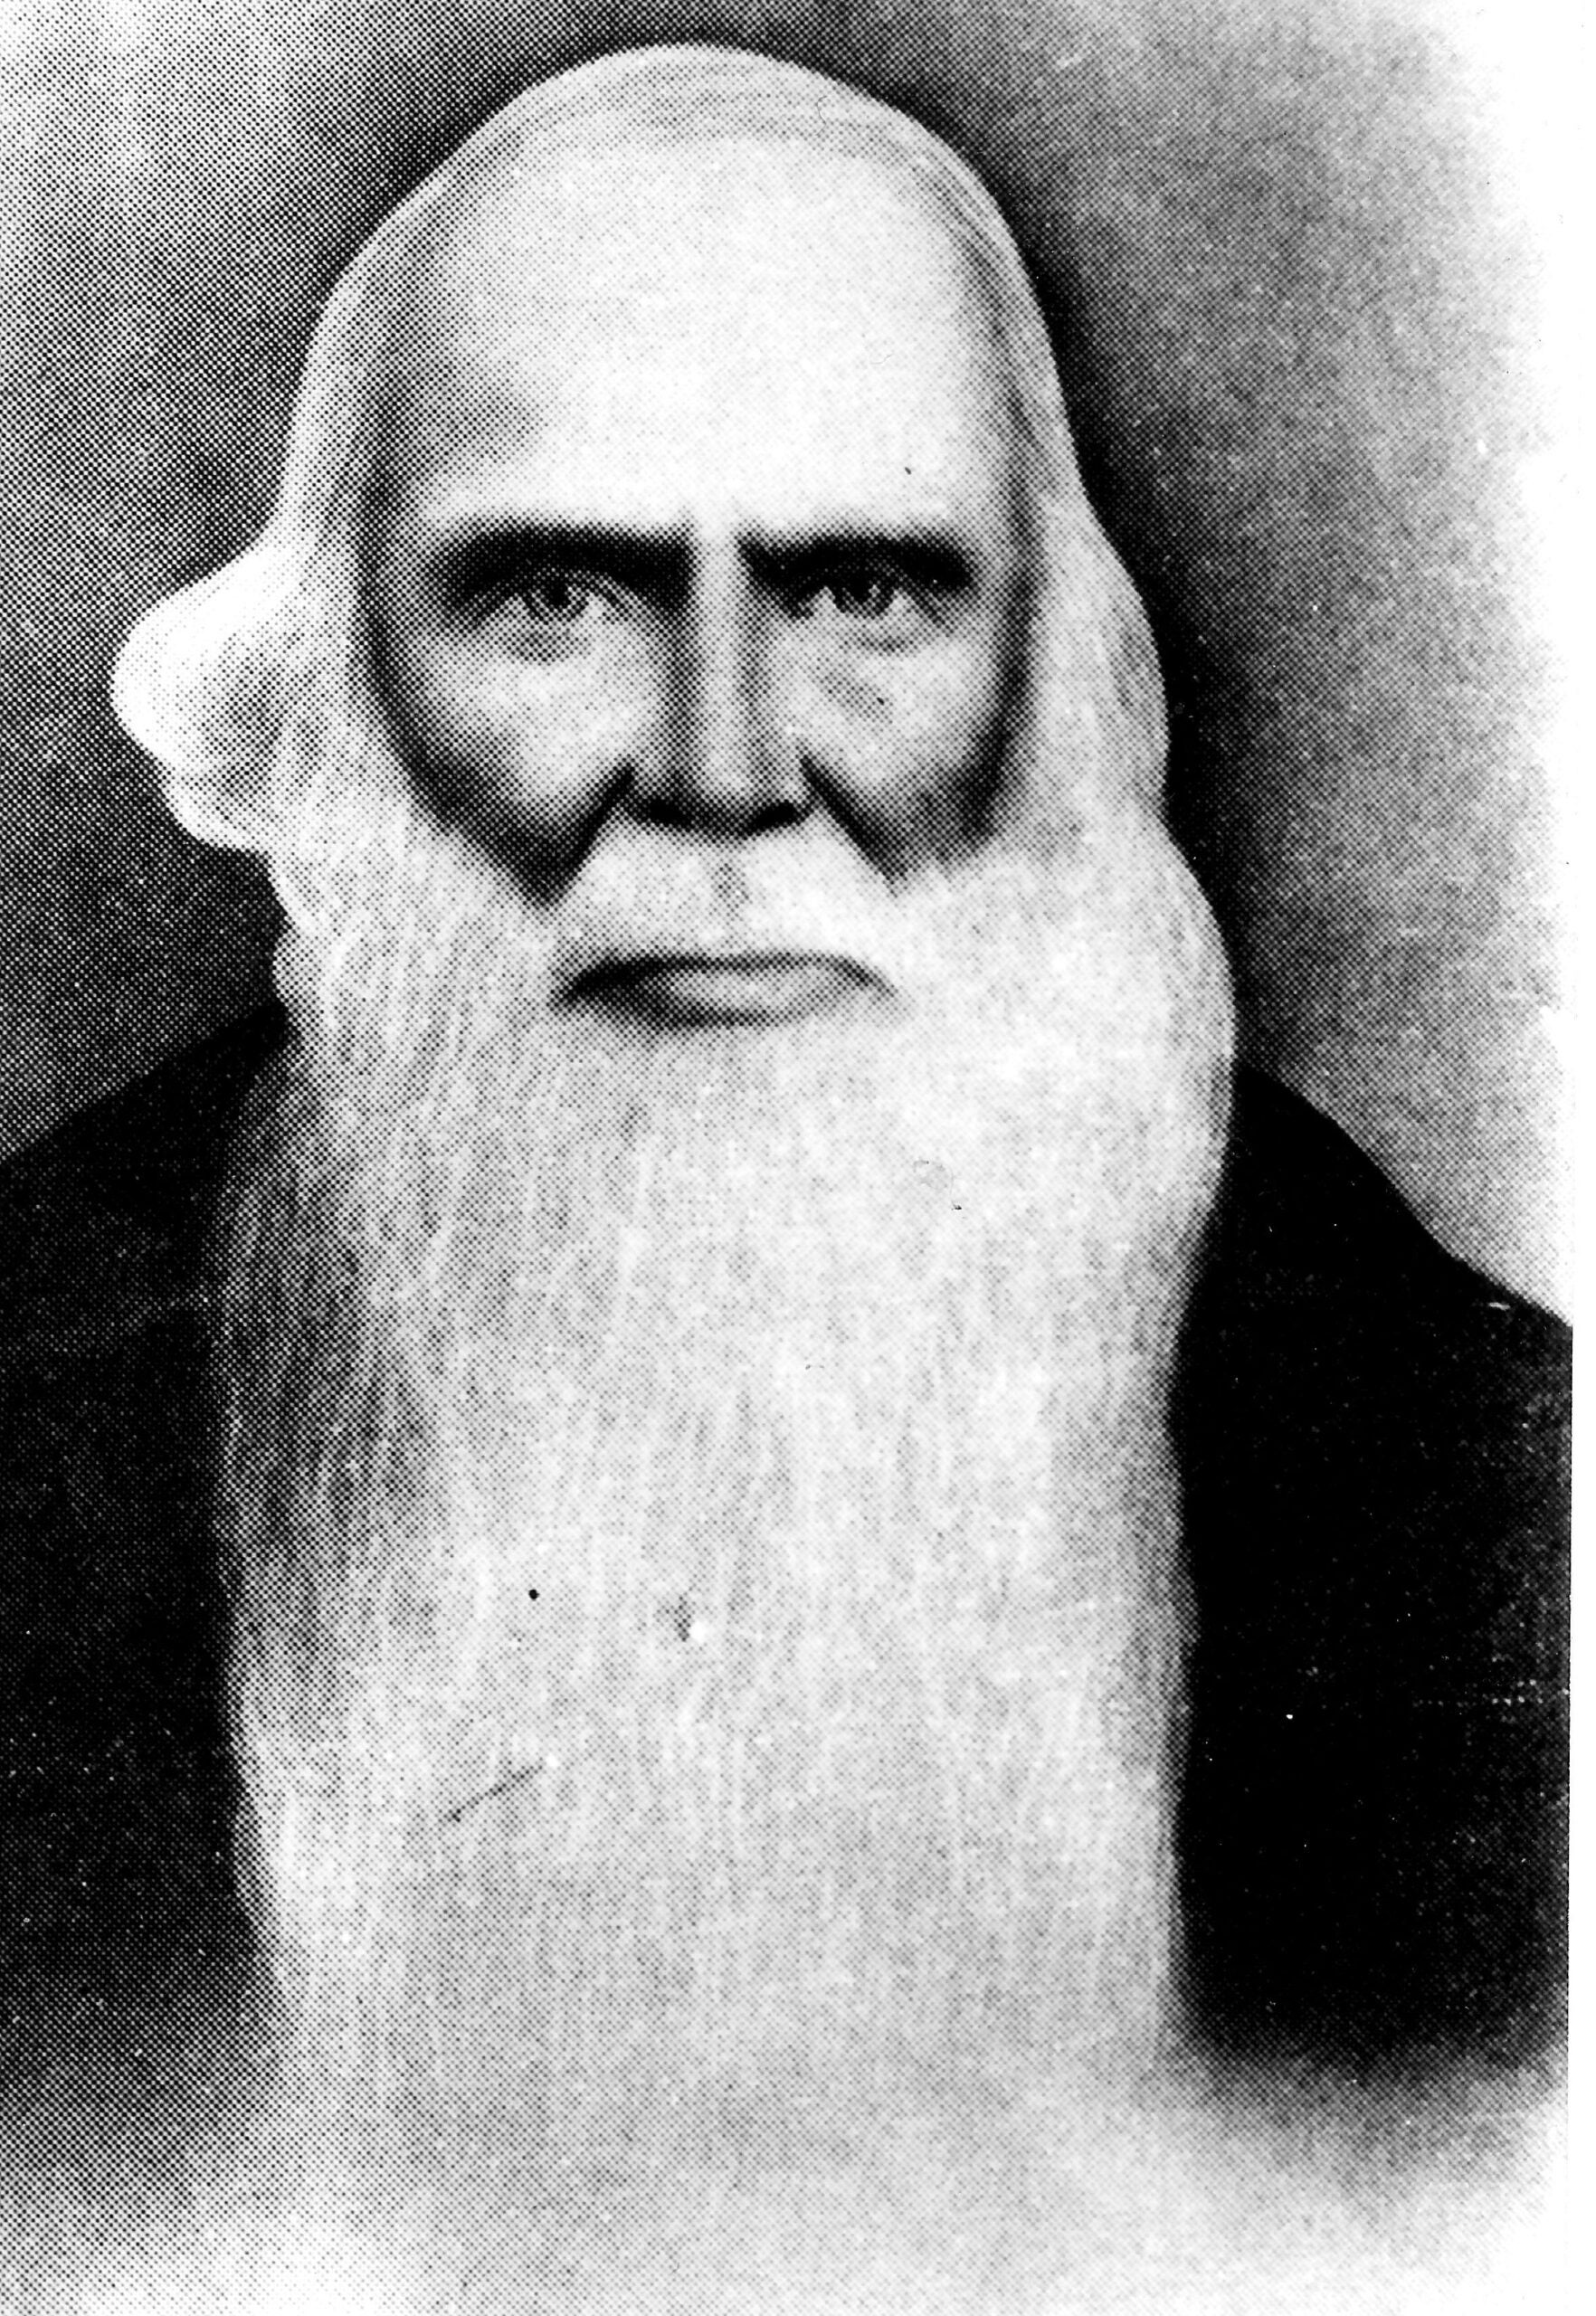 The founding father of the McRae family was Farquhar Charles "FC" McRae (AL 1817 - LA 1900).